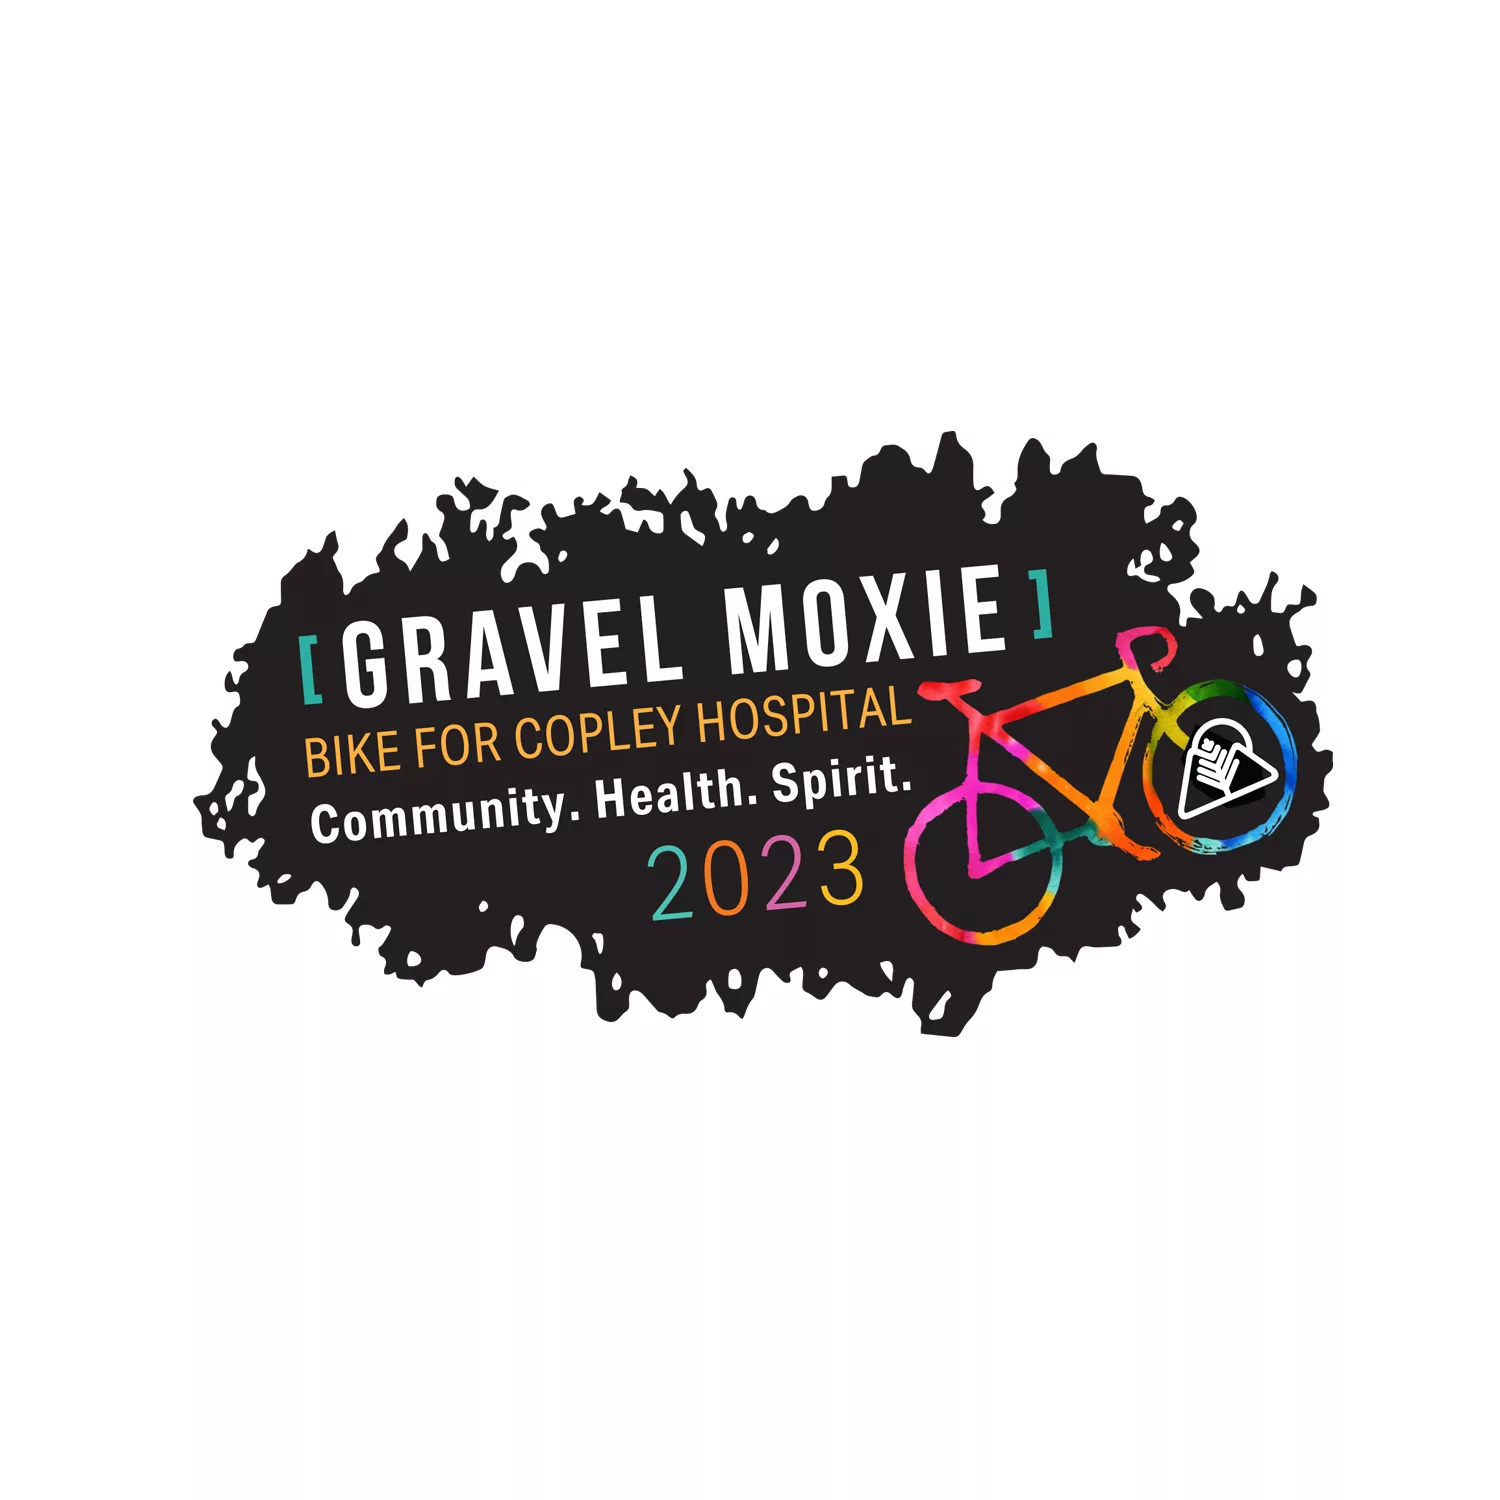 Gravel Moxie